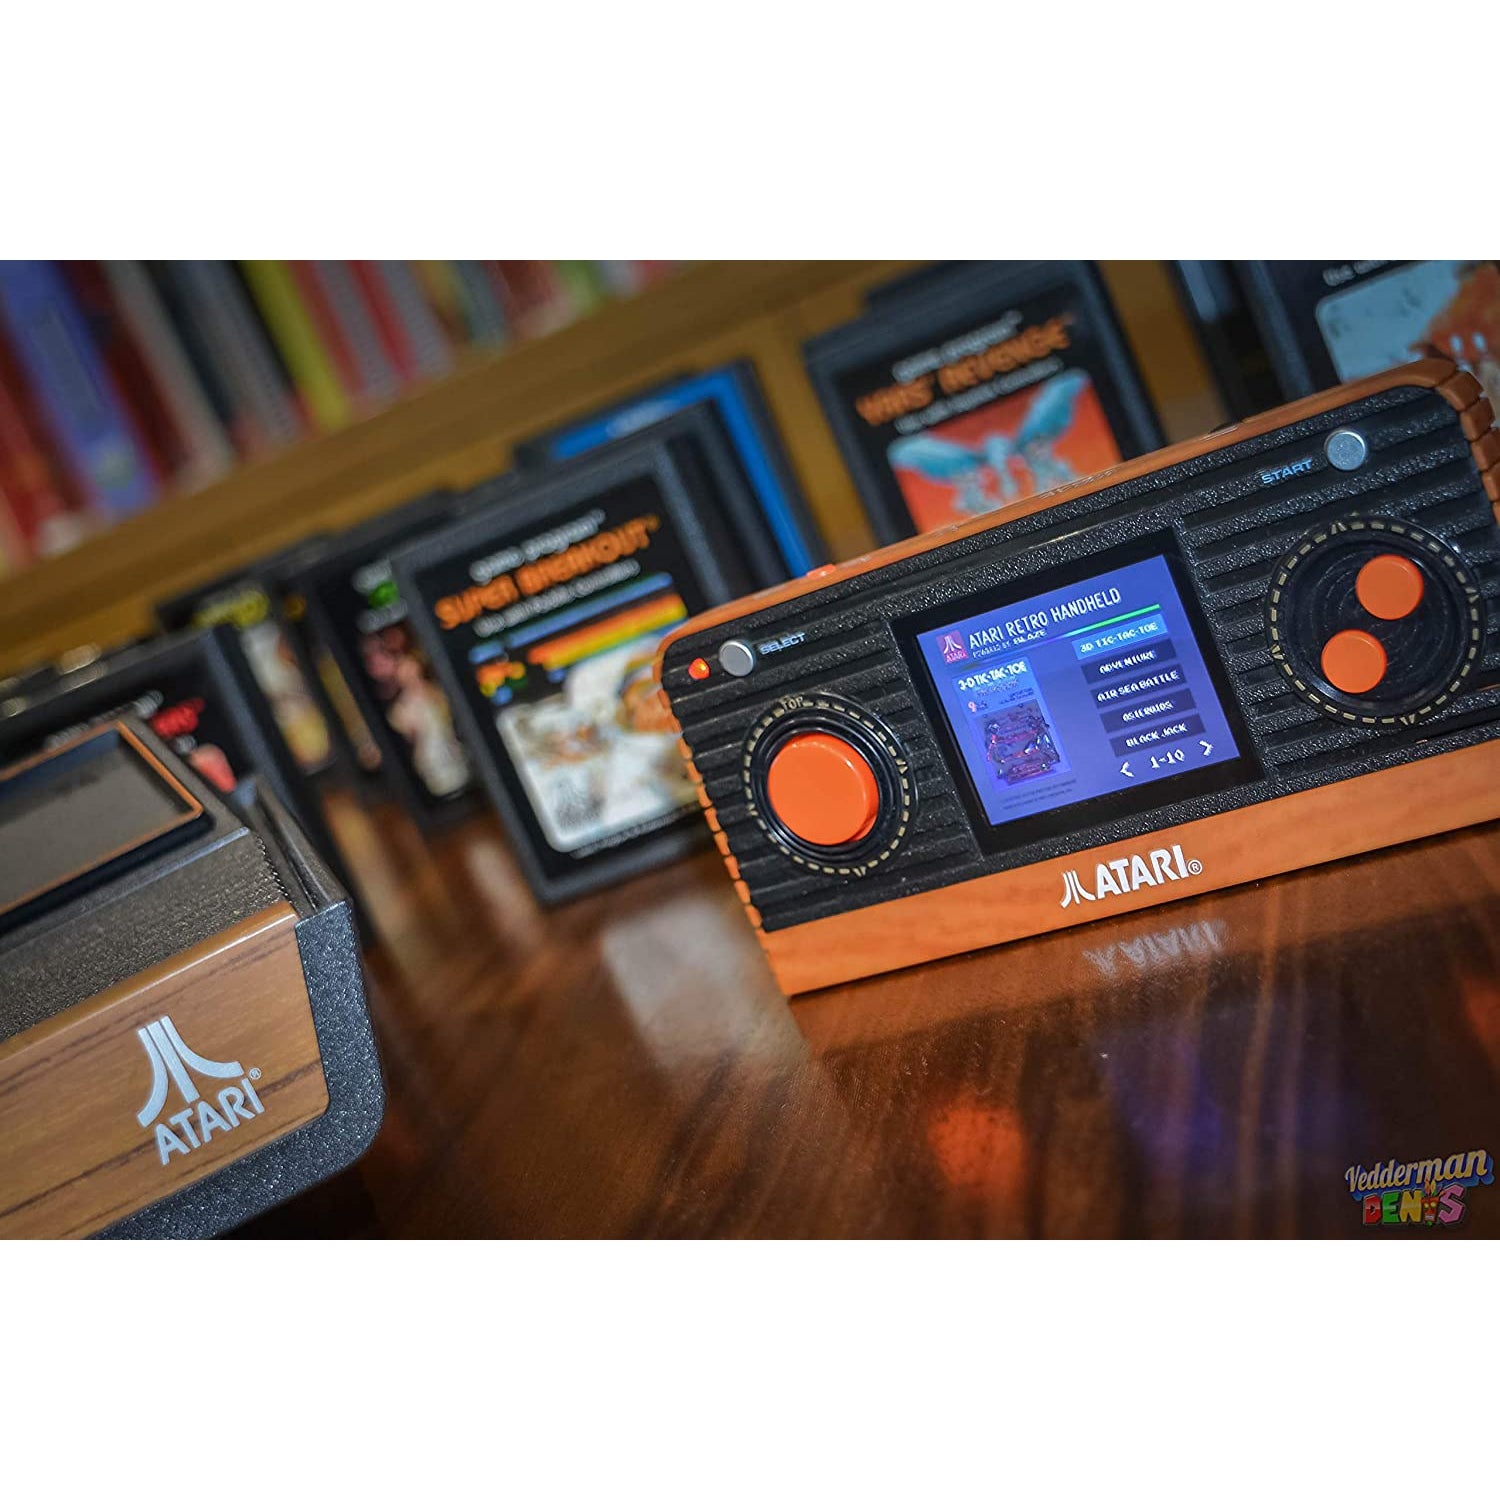 Atari Pac-Man Retro Handheld Console with 60 Games - Pristine Condition